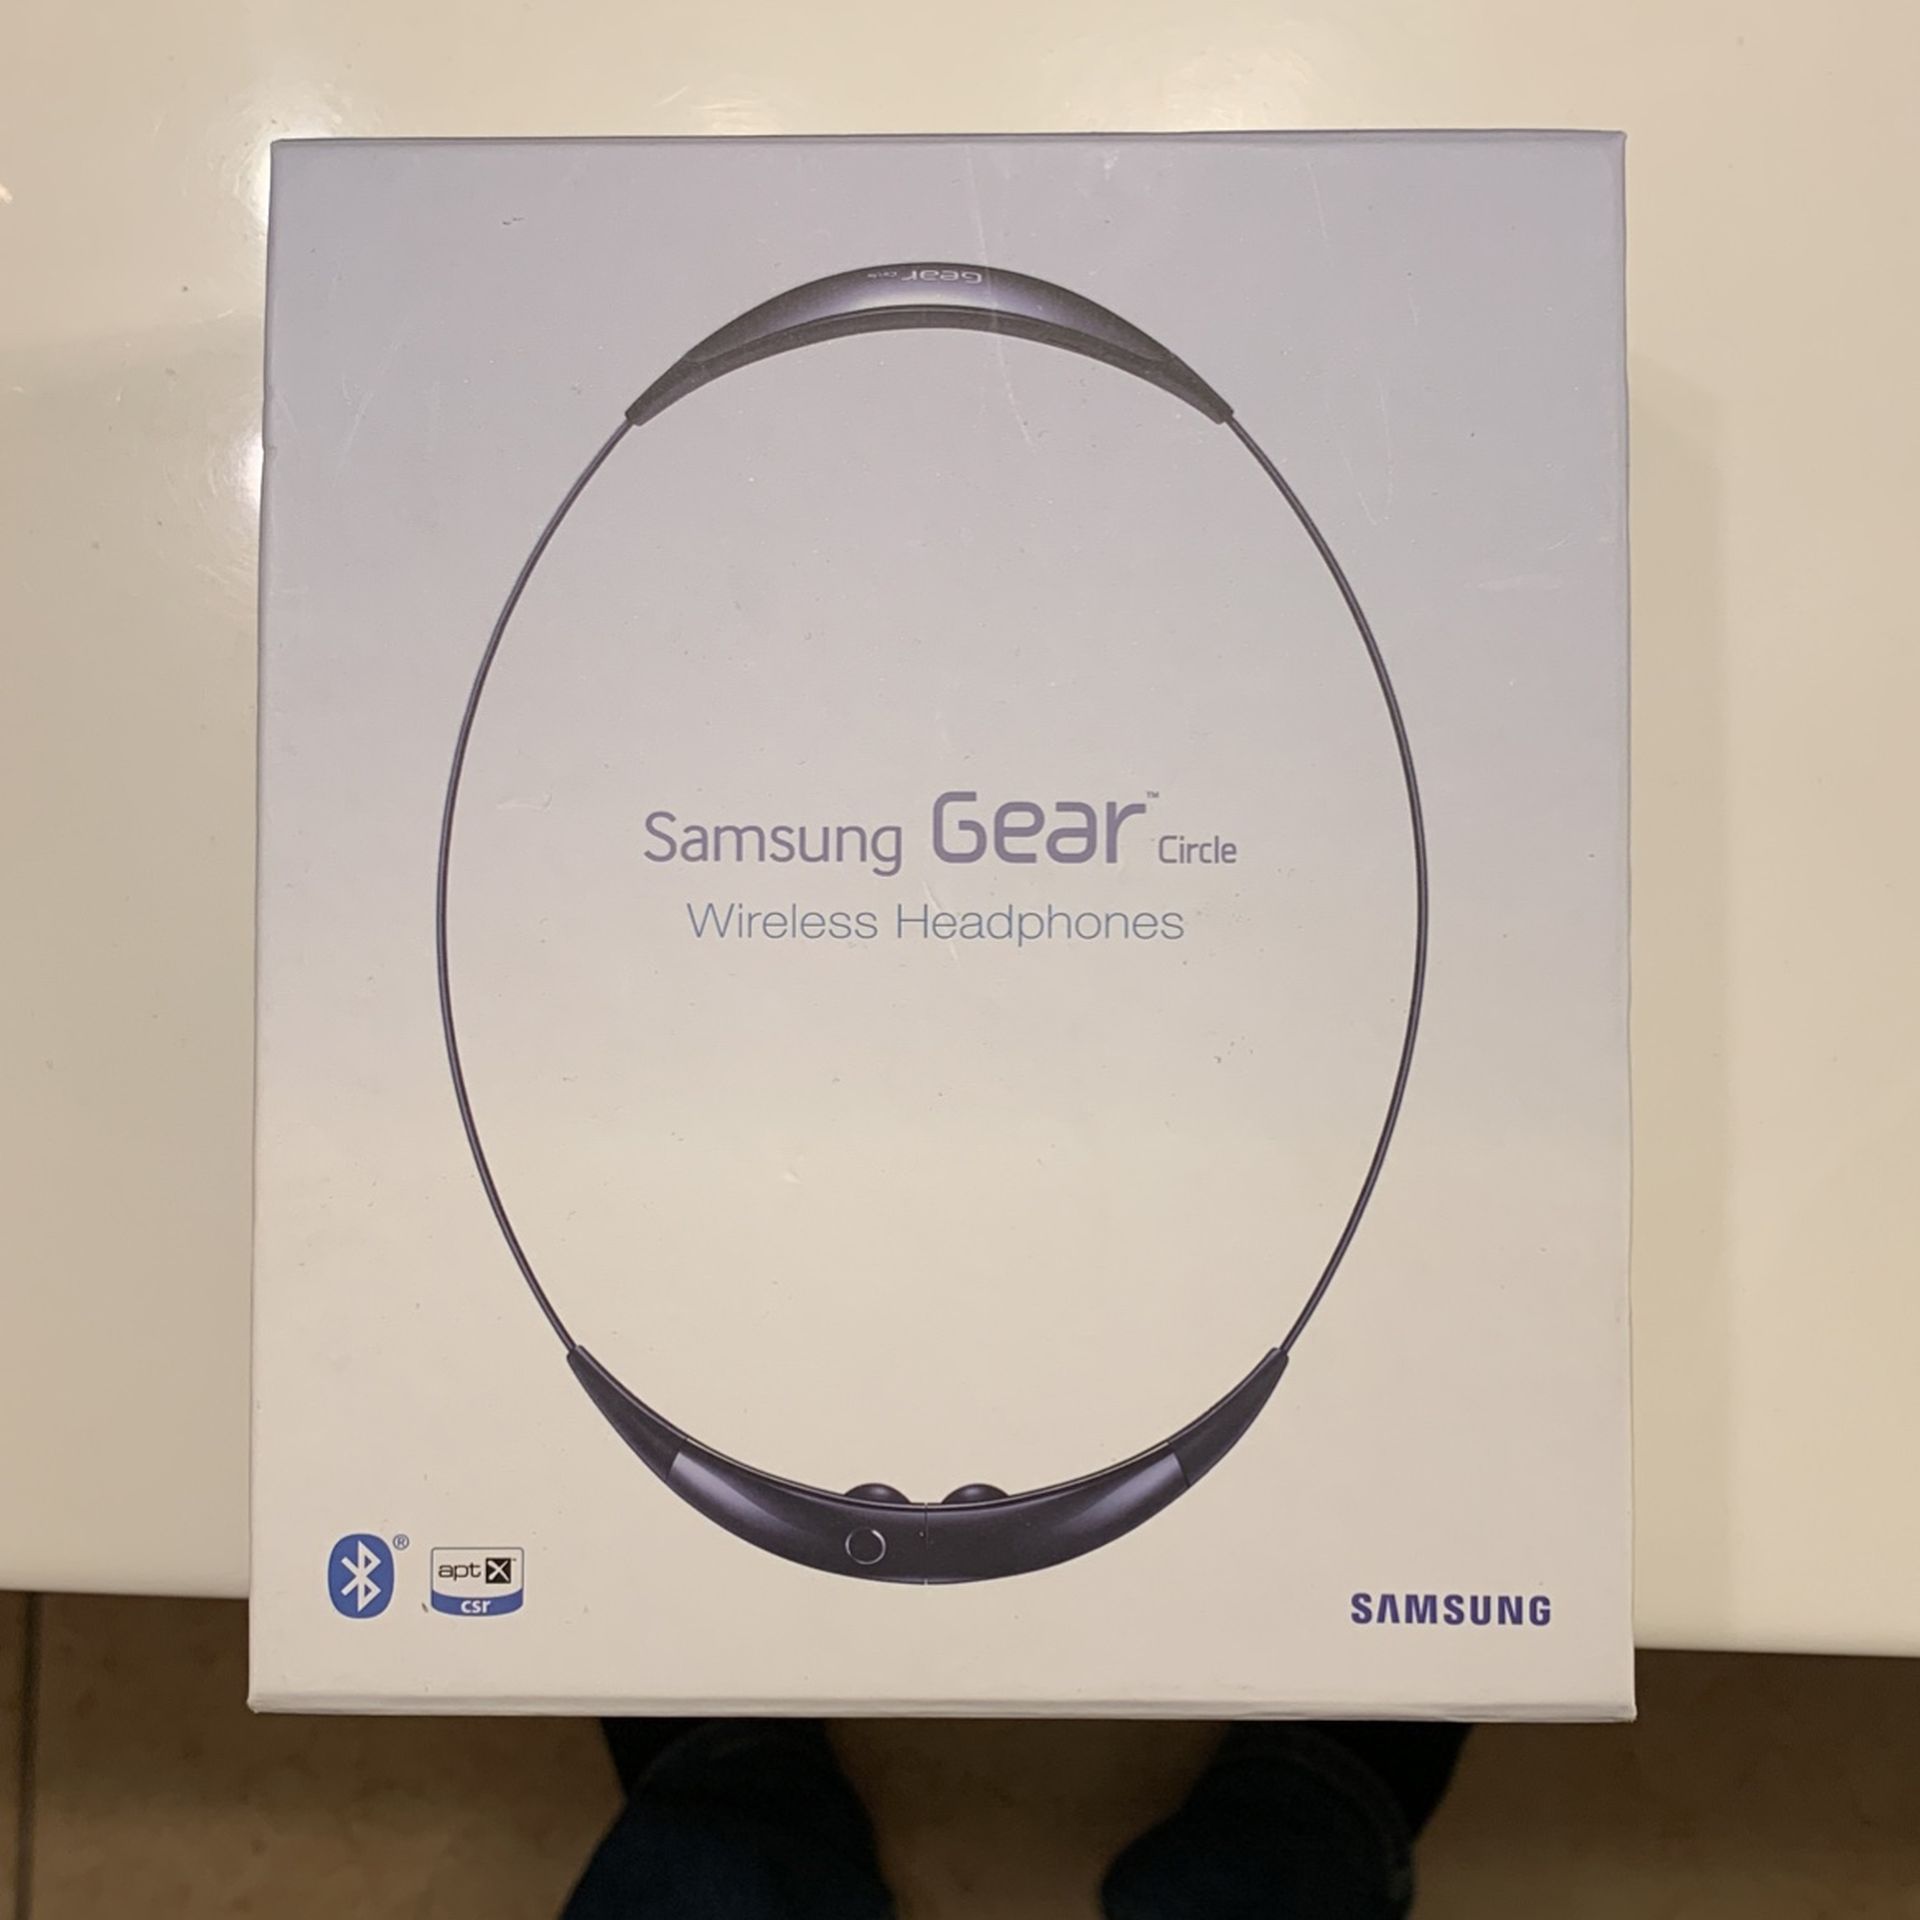 Samsung Headphones - Gear Circle Wireless